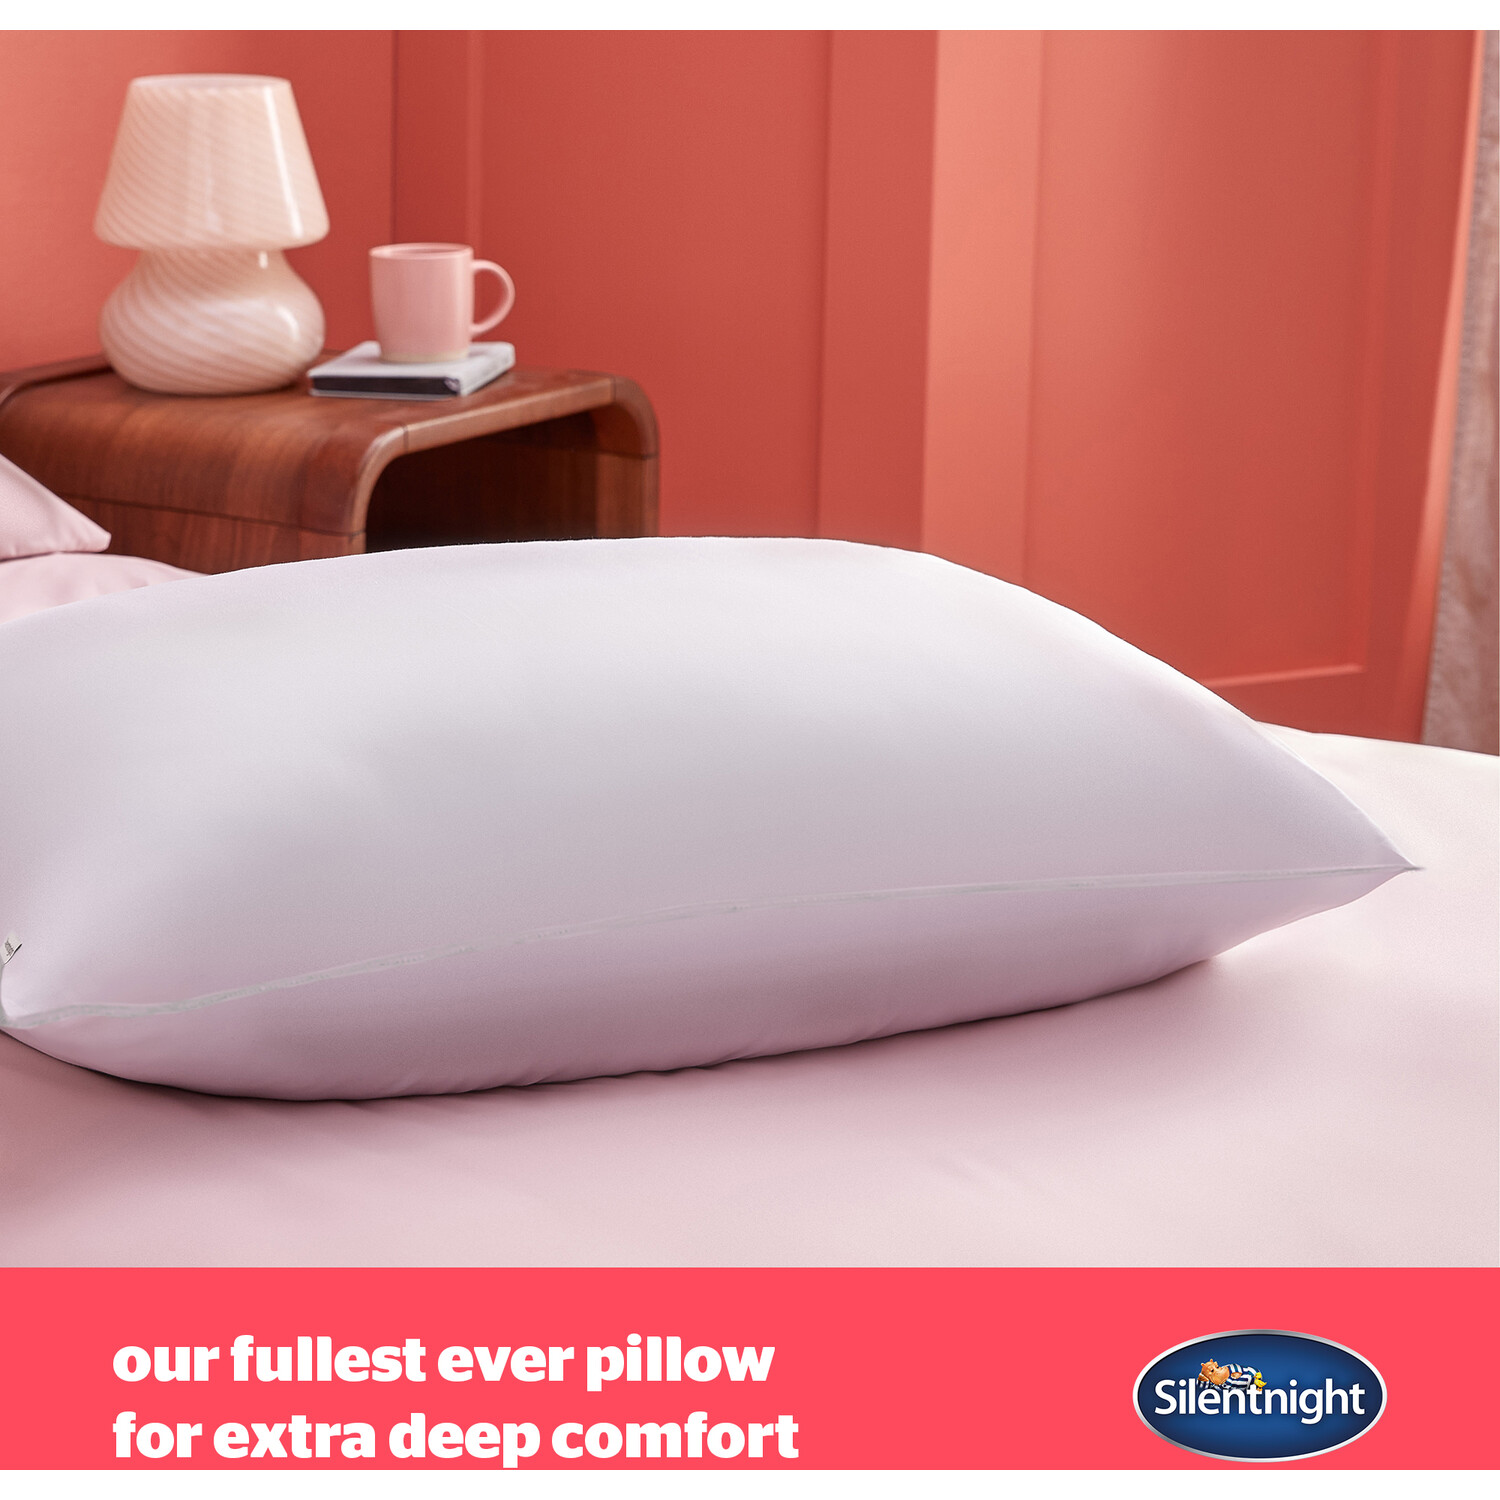 Silentnight Full Big Pillow 48 x 70cm Image 2